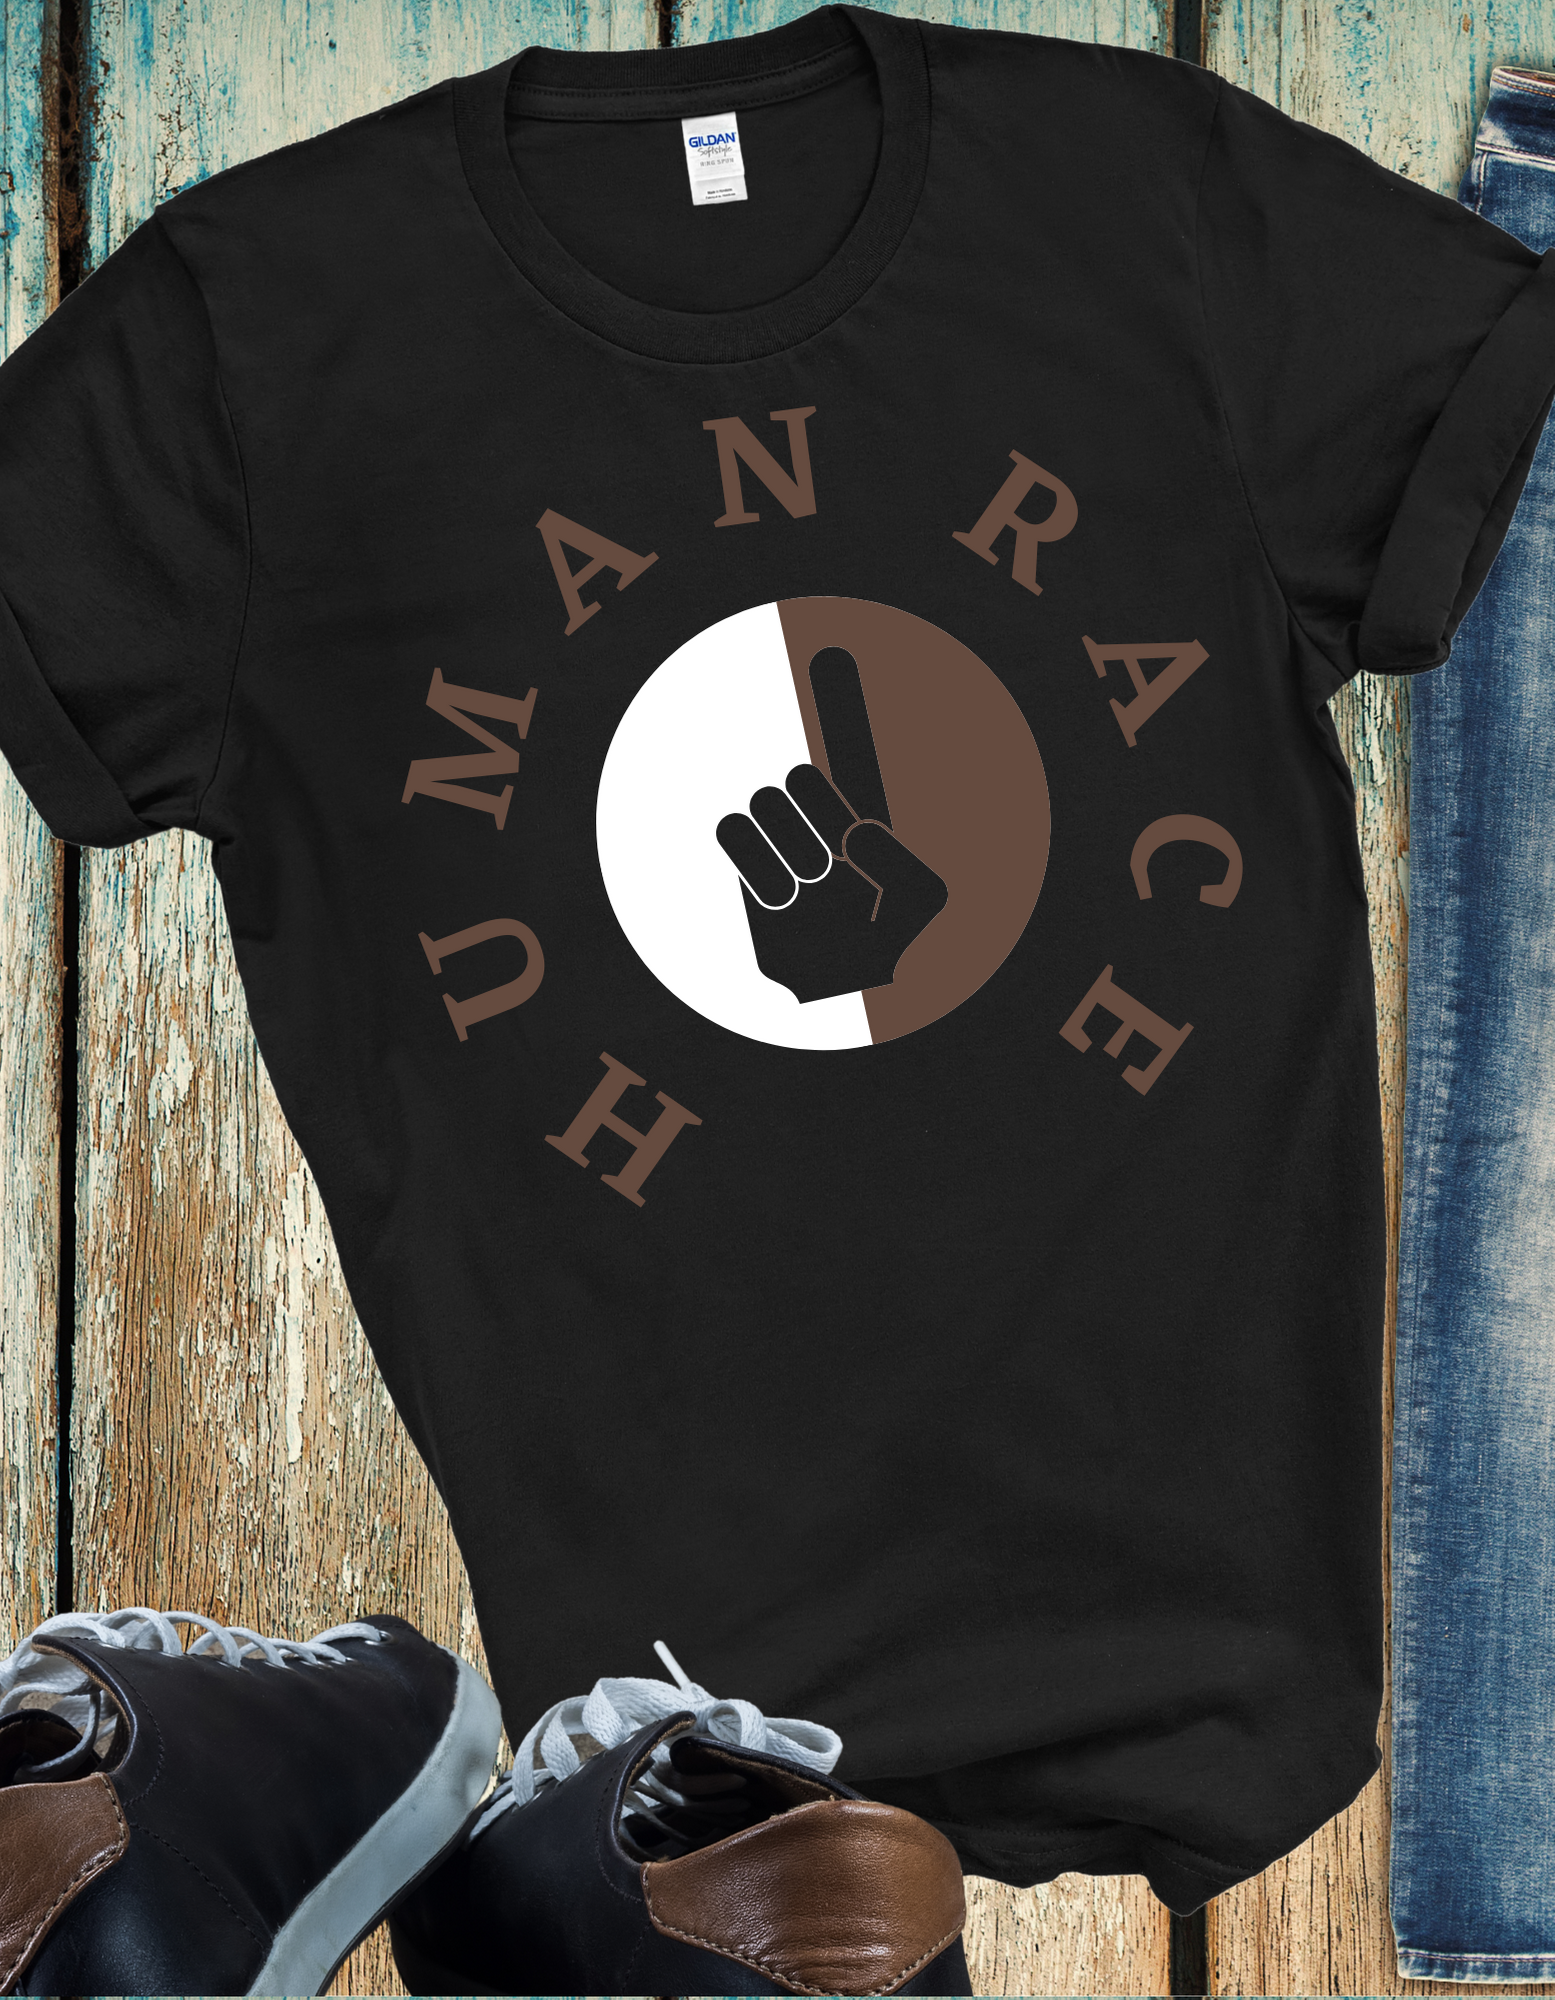 One HUMAN RACE t-shirt